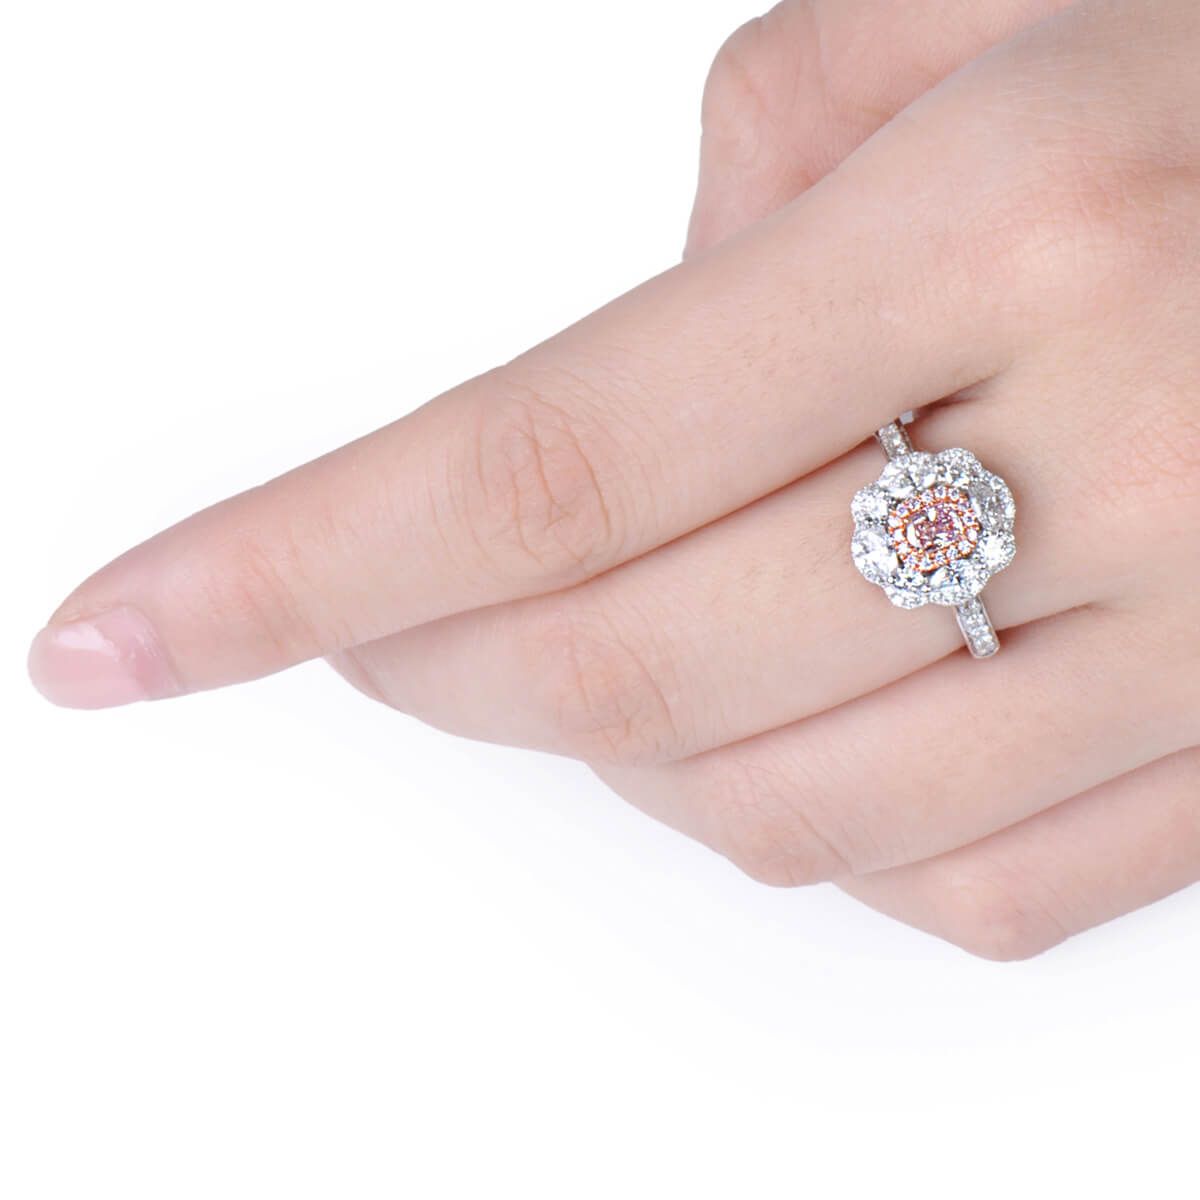 Fancy Brownish Pink Diamond Ring, 0.21 Ct. (1.00 Ct. TW), Cushion shape, GIA Certified, 2185341709